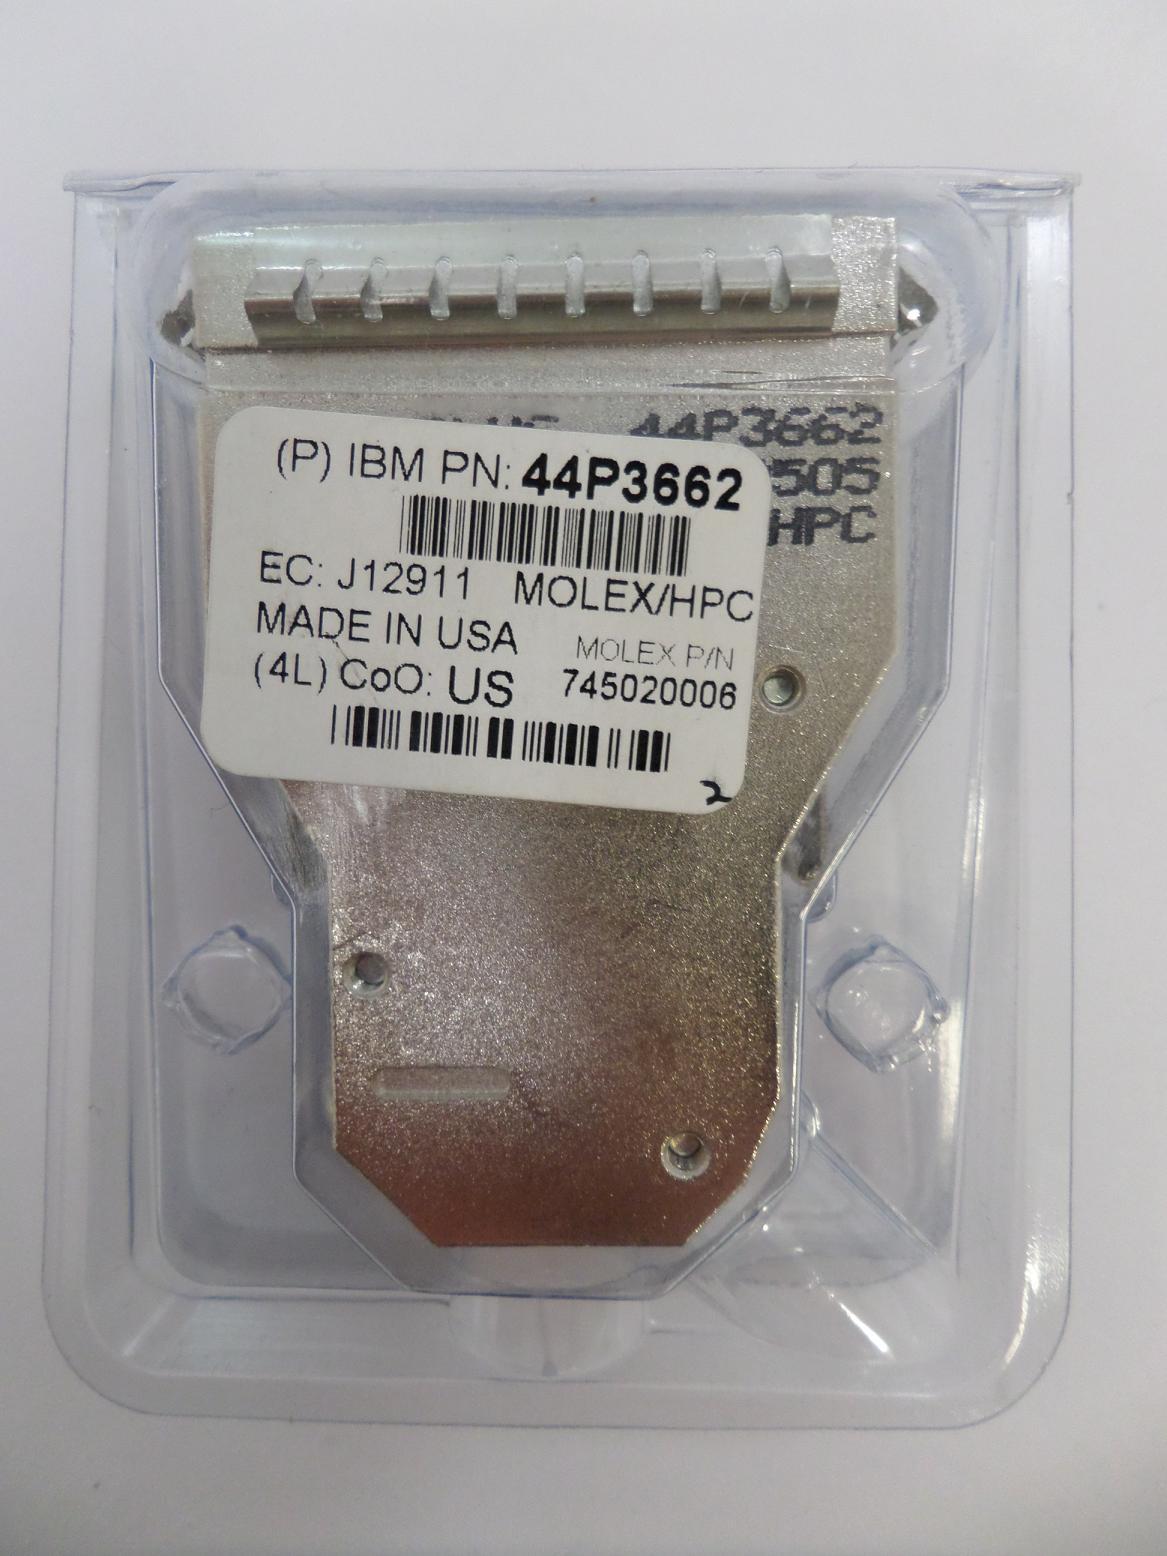 44P3662 - IBM STI Wrap Plug Molex/HPC Add-on Module - NOB